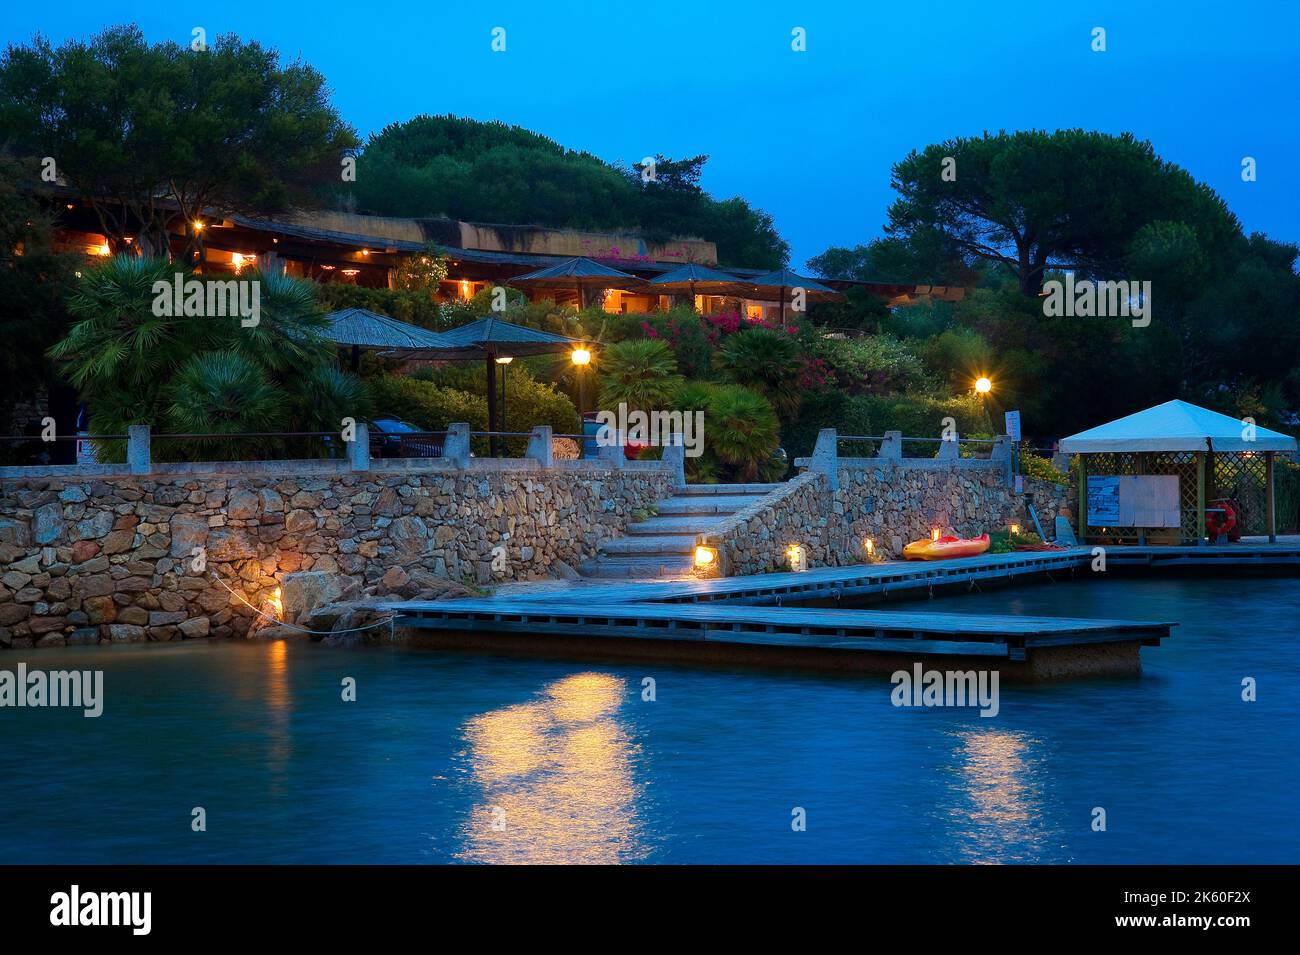 Paguro Restaurant, Hotel Capo d'Orso, Delphina Resorts, Palau, Bocche di Bonifacio, La Maddalena Archipelago, Sardinia, Italy, Europe Stock Photo